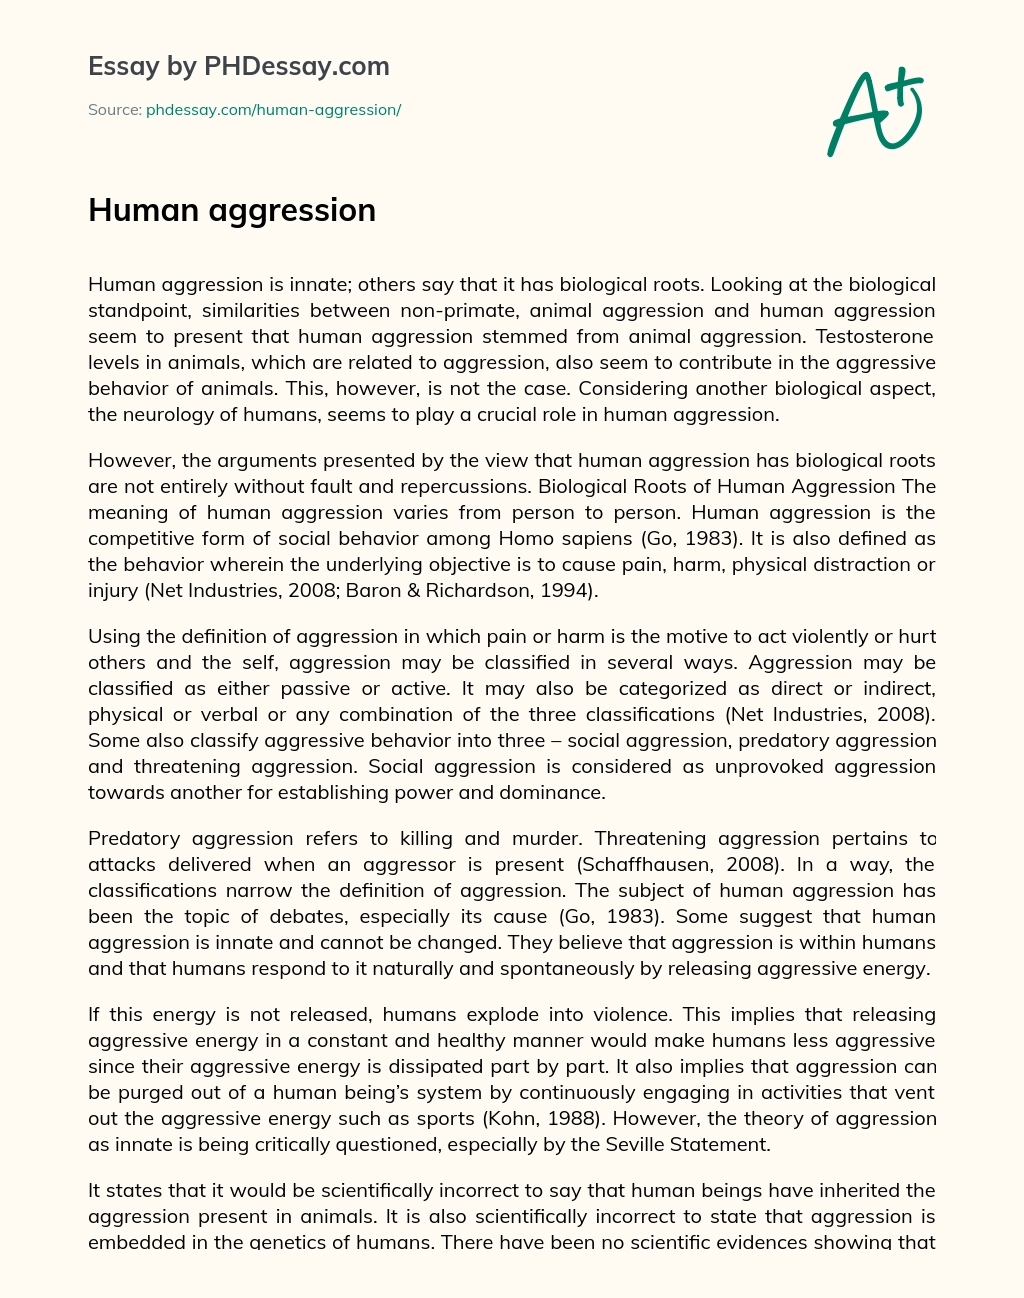 Human aggression essay